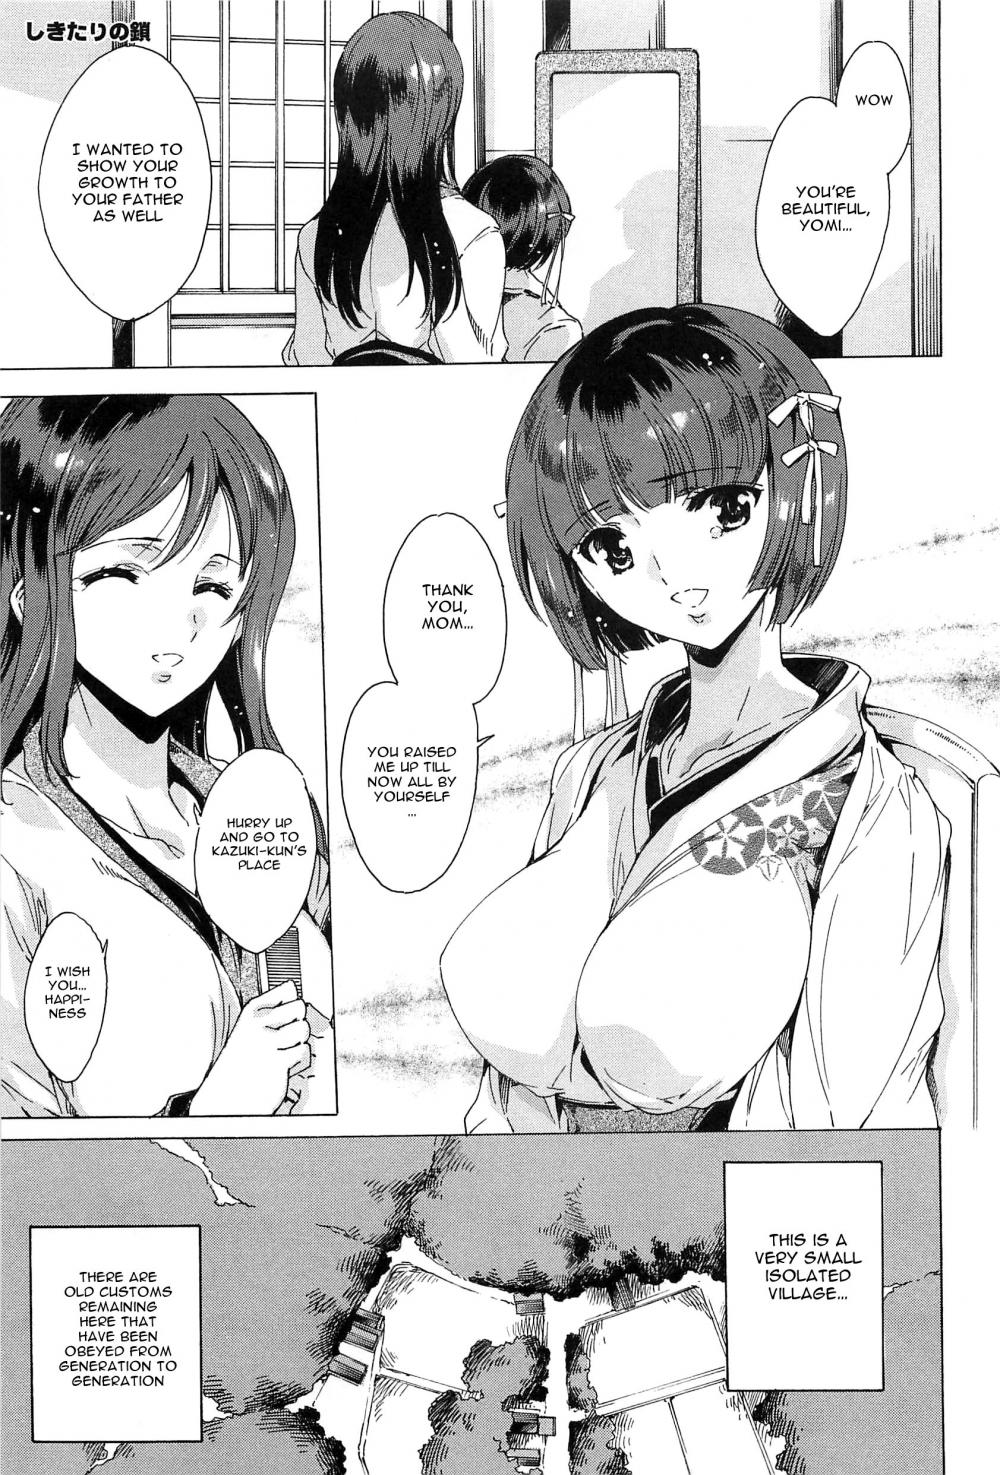 Hentai Manga Comic-Chains of Lust - NTR Girlfriend-Chapter 7-1